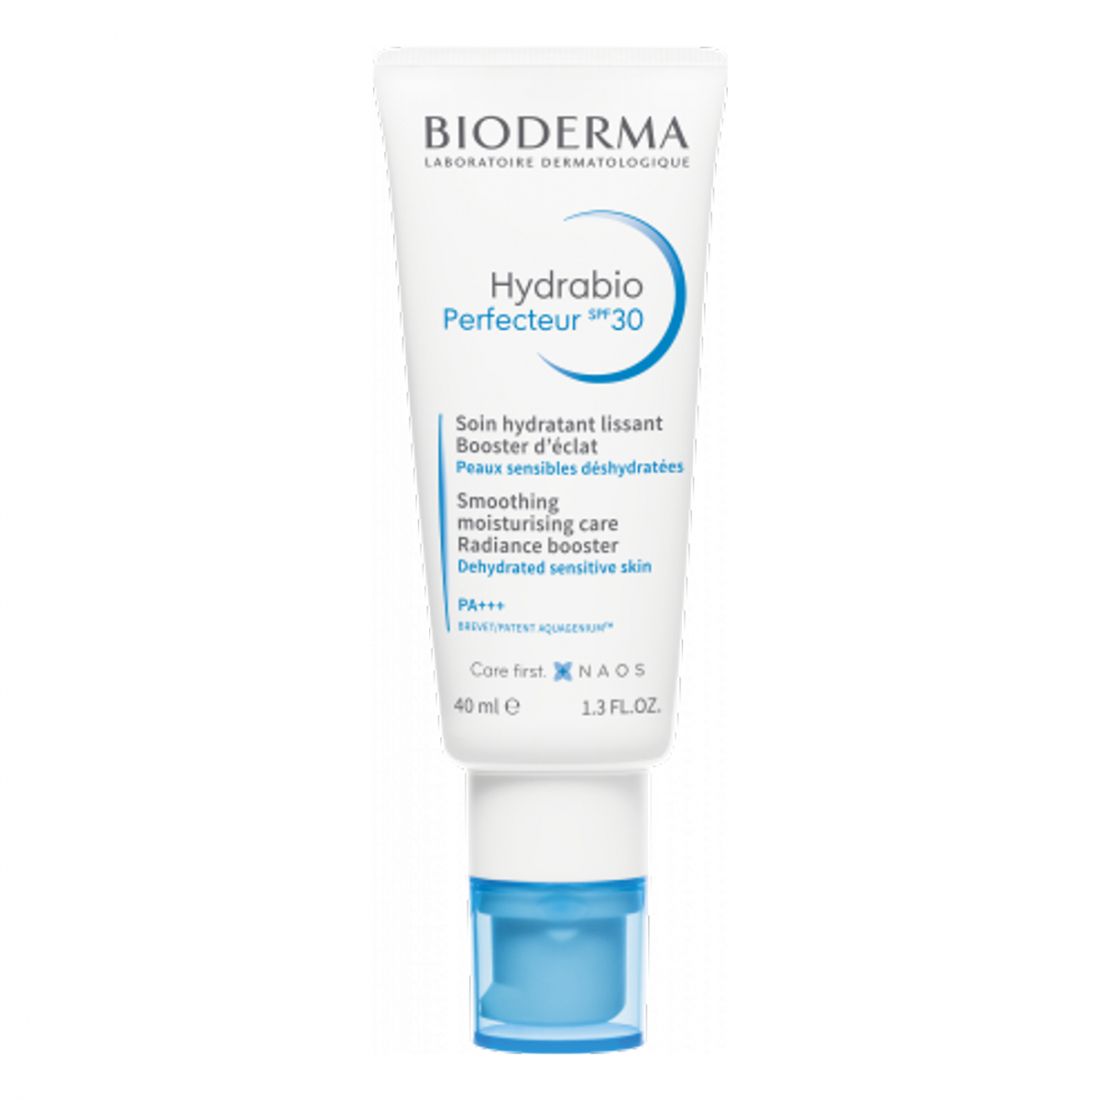 Bioderma - Hydratant 'Hydrabio Perfecteur SPF30' - 40 ml